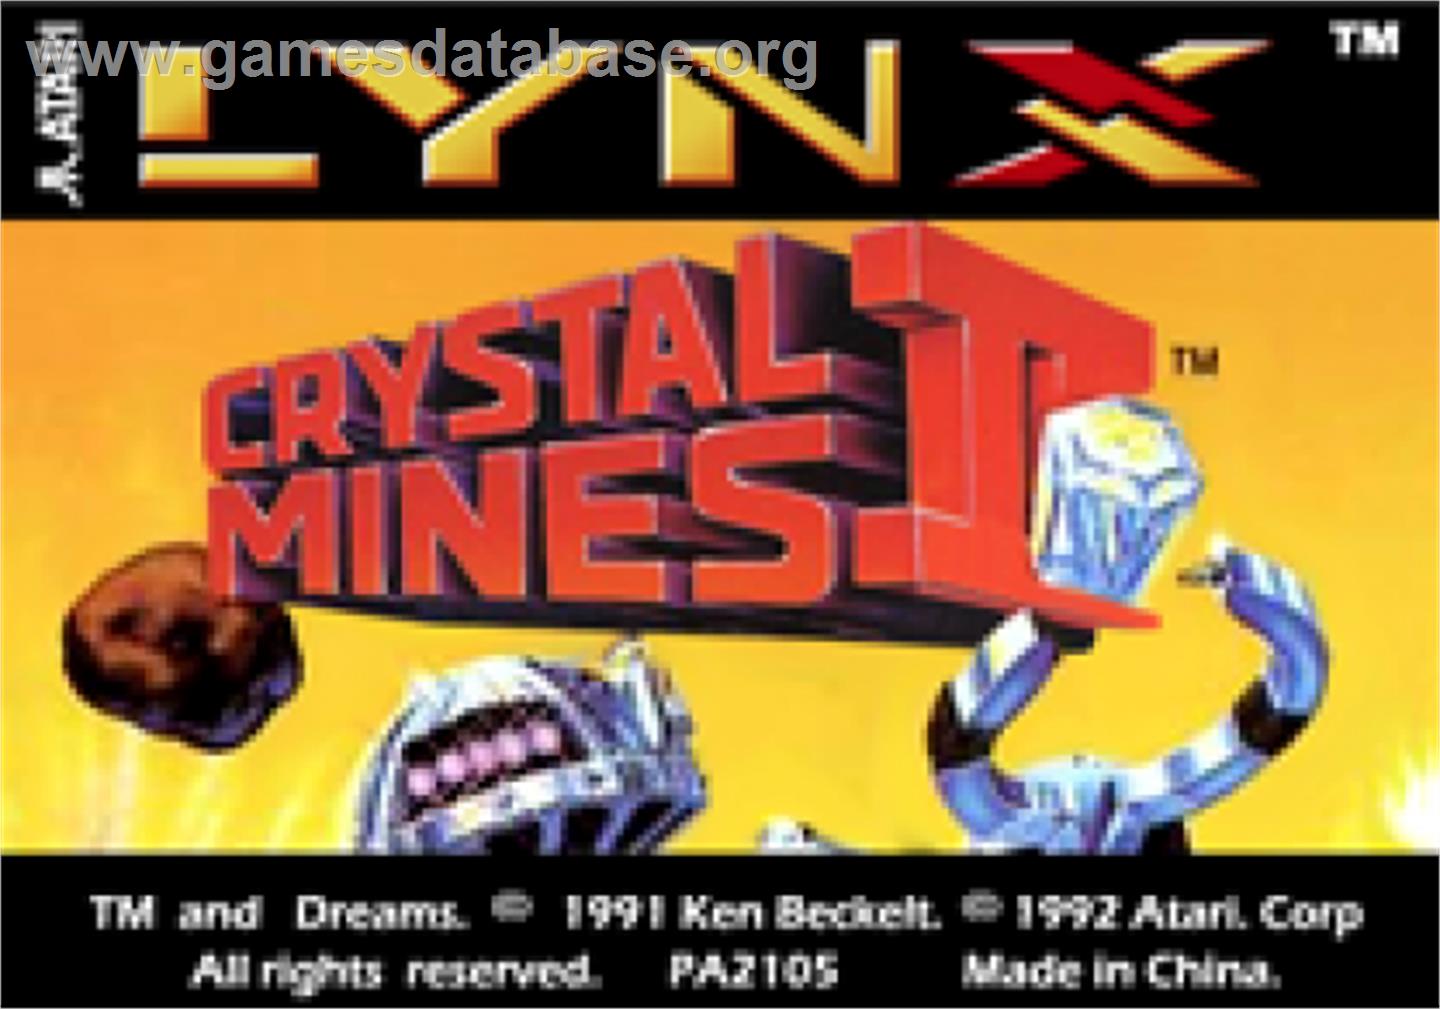 Crystal Mines II: Buried Treasure - Atari Lynx - Artwork - Cartridge Top